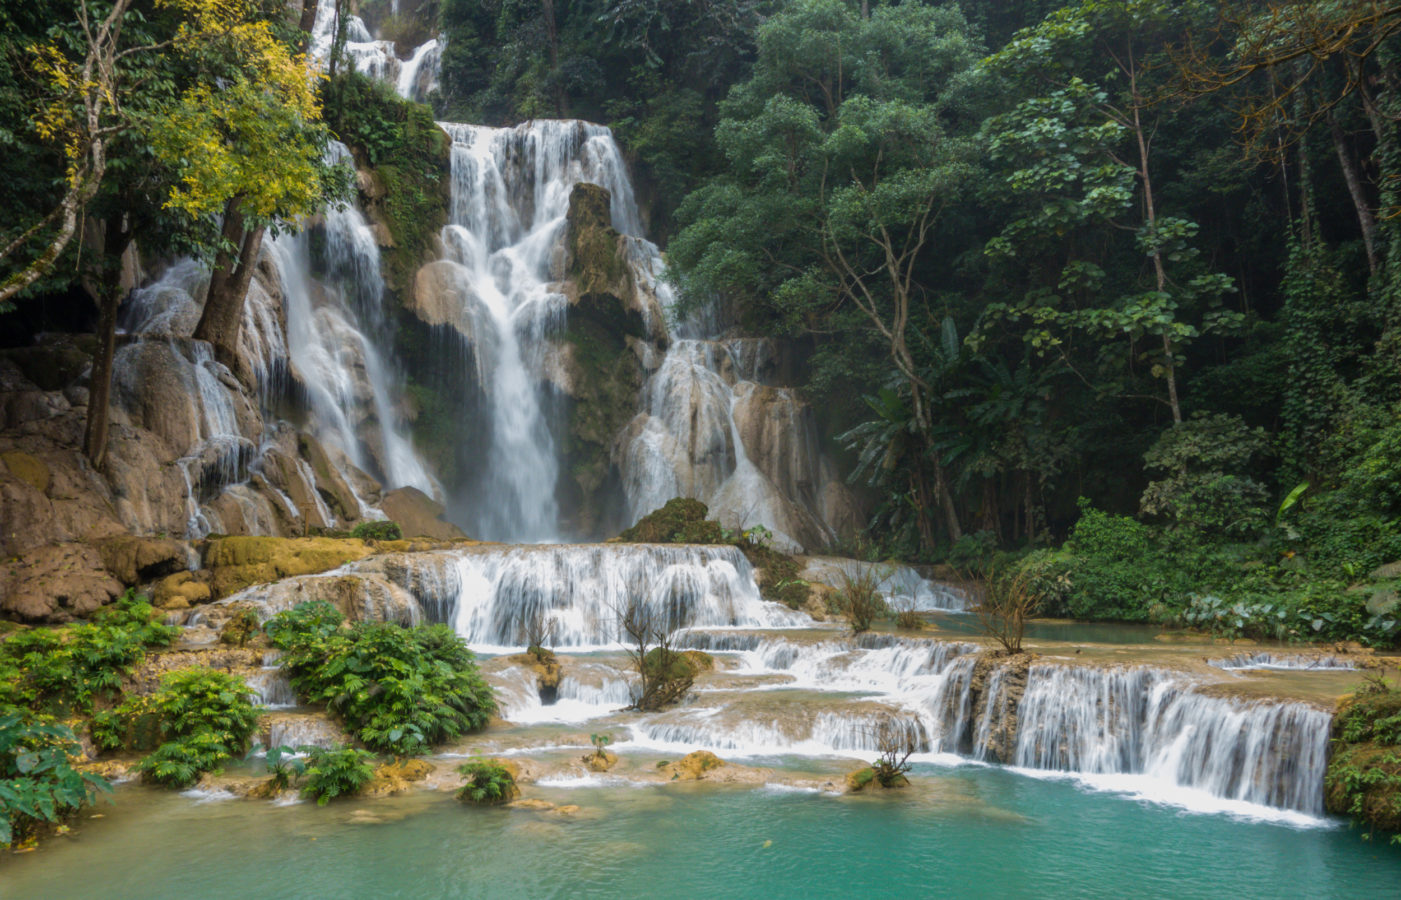 The main Kuang Si Falls, Laos